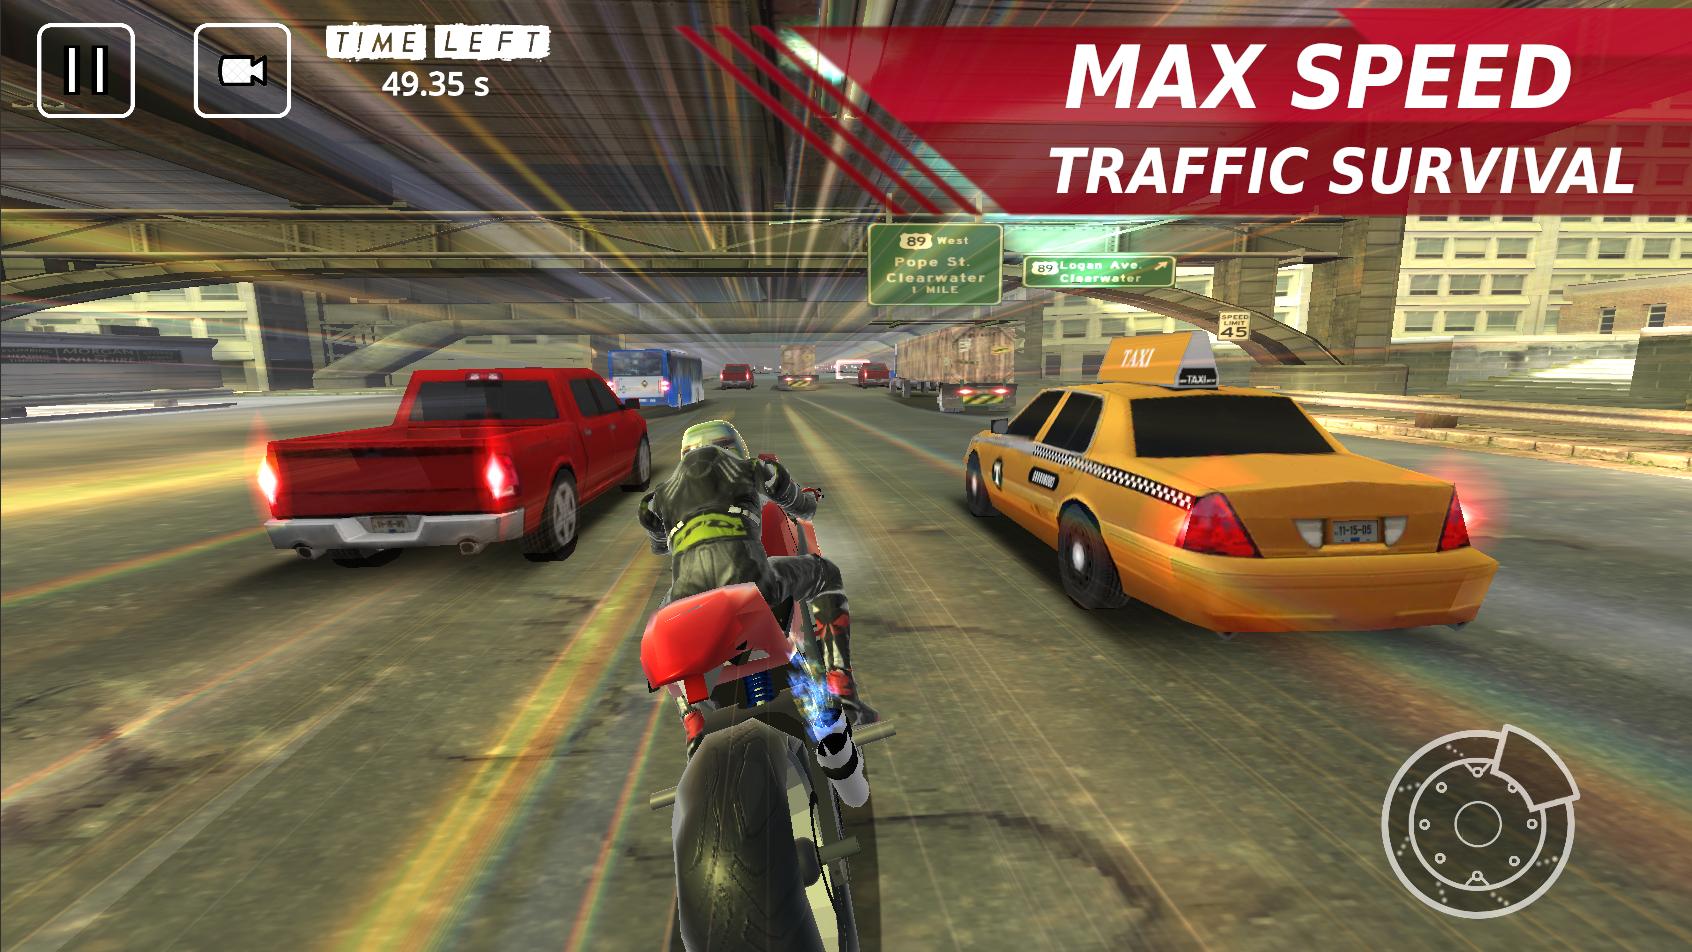 Rebel Gears Drag Bike Racing / CSR Race Moto Game 1.3.2 Screenshot 21